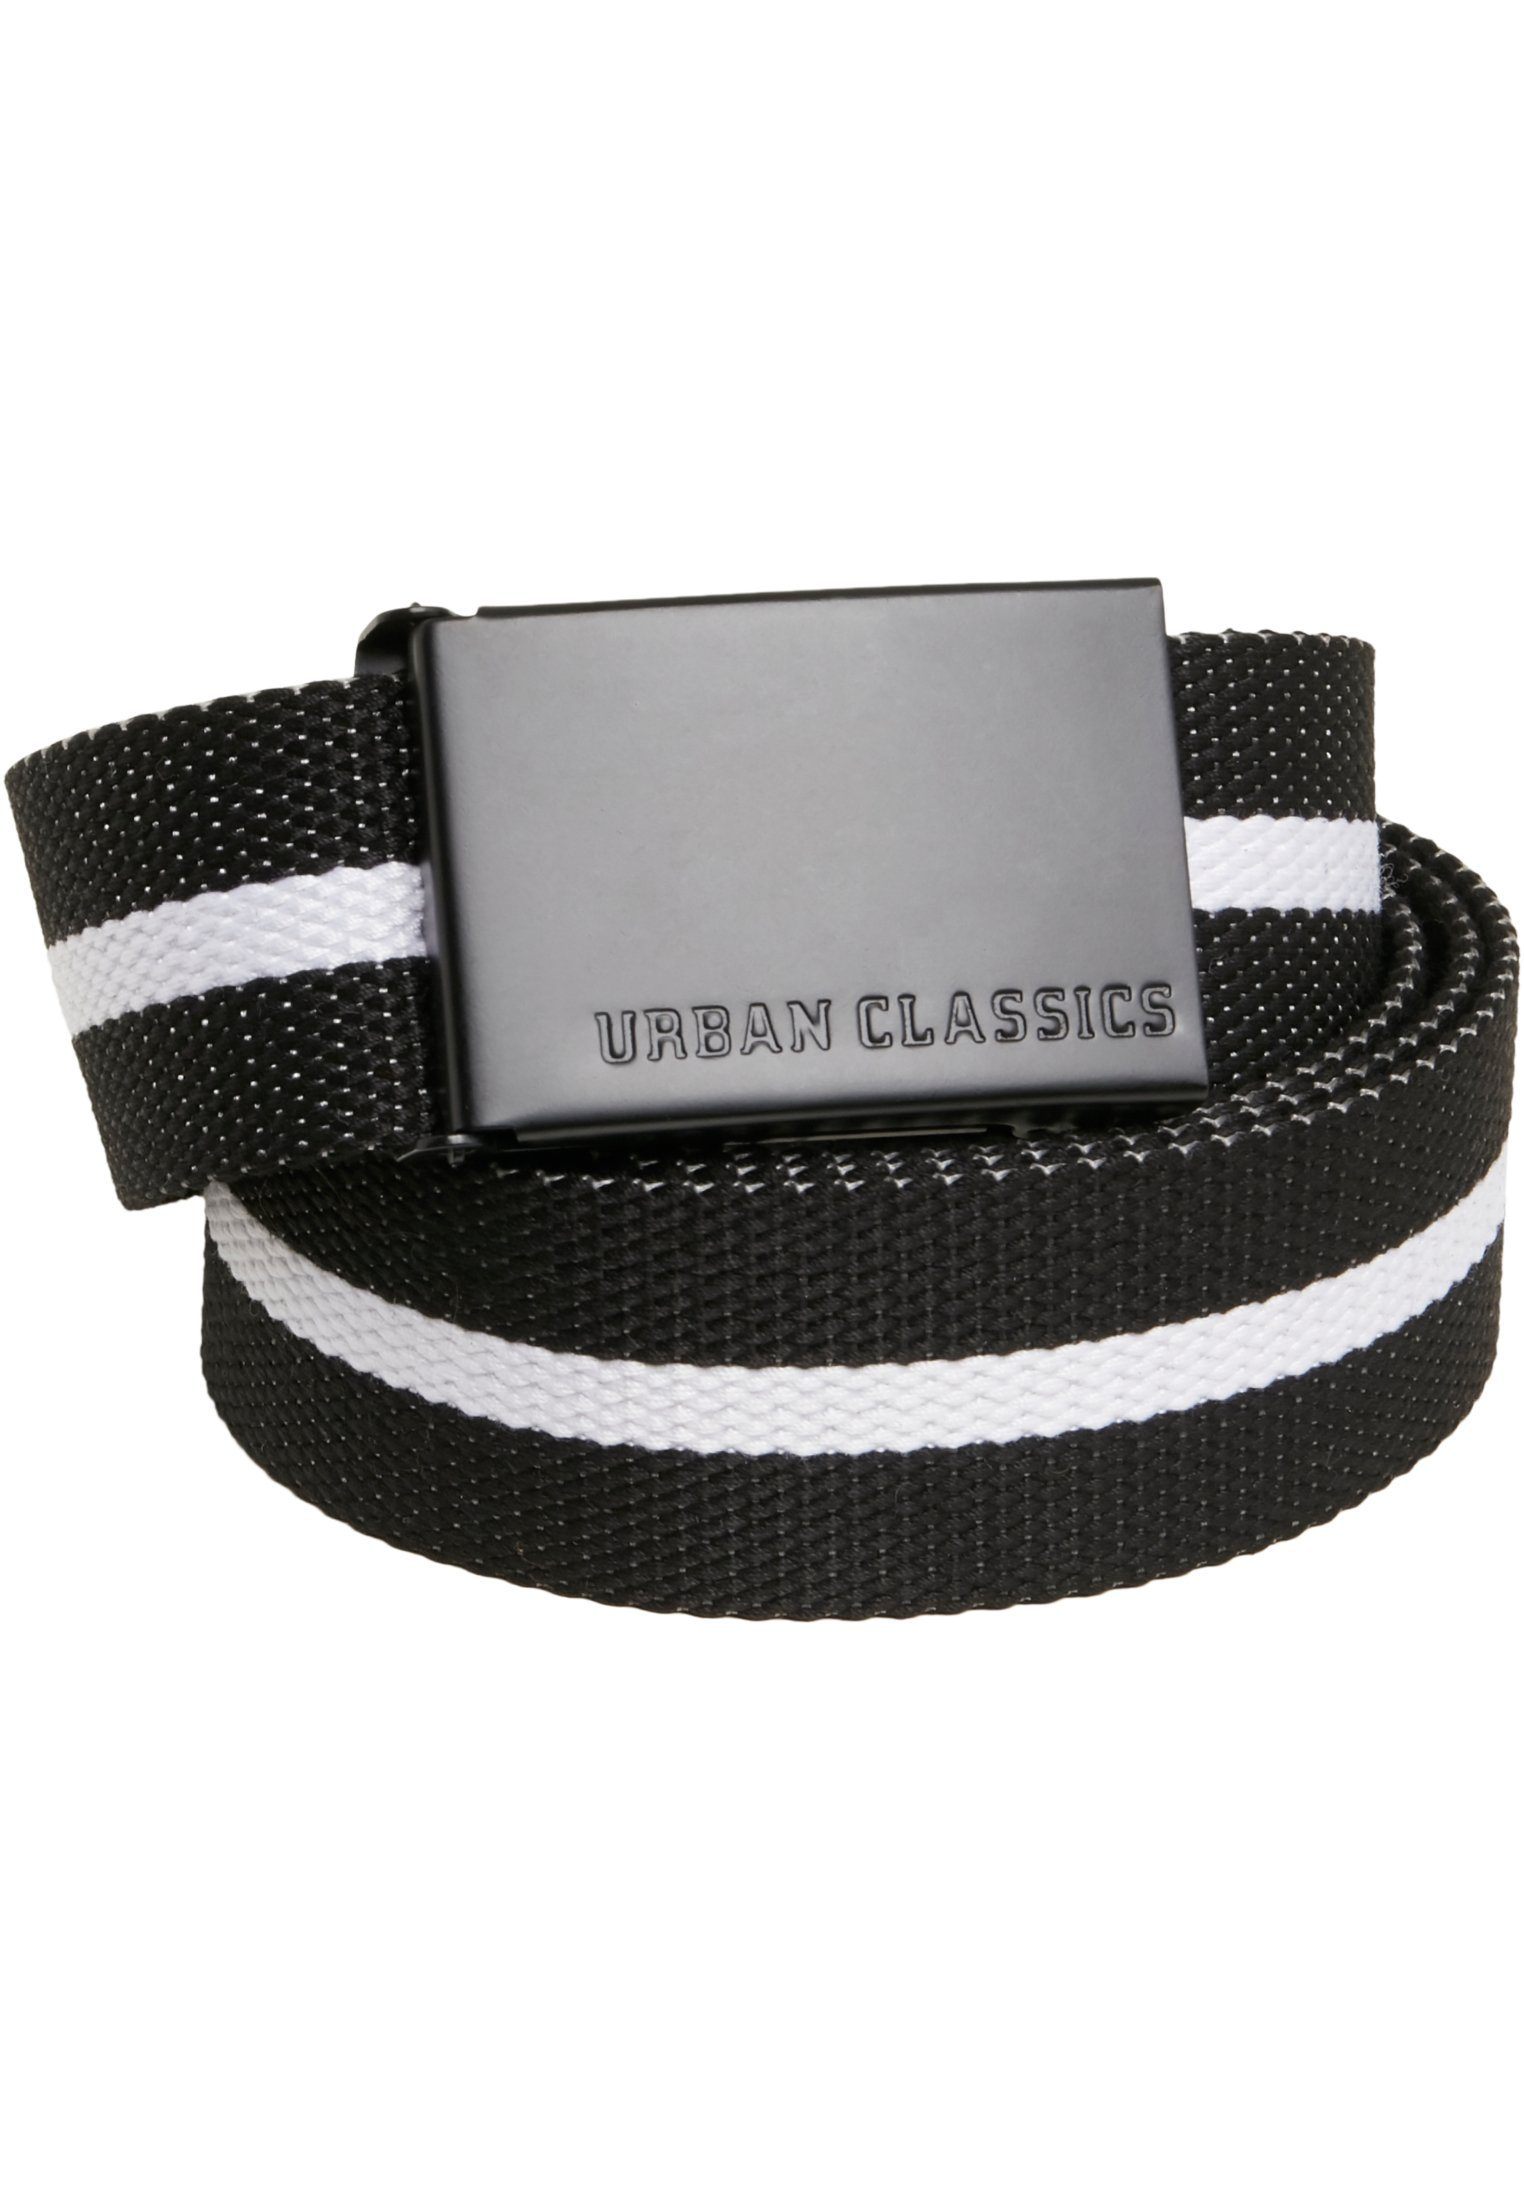 URBAN CLASSICS Hüftgürtel Accessoires Canvas Belts black white stripe-black | Gürtel